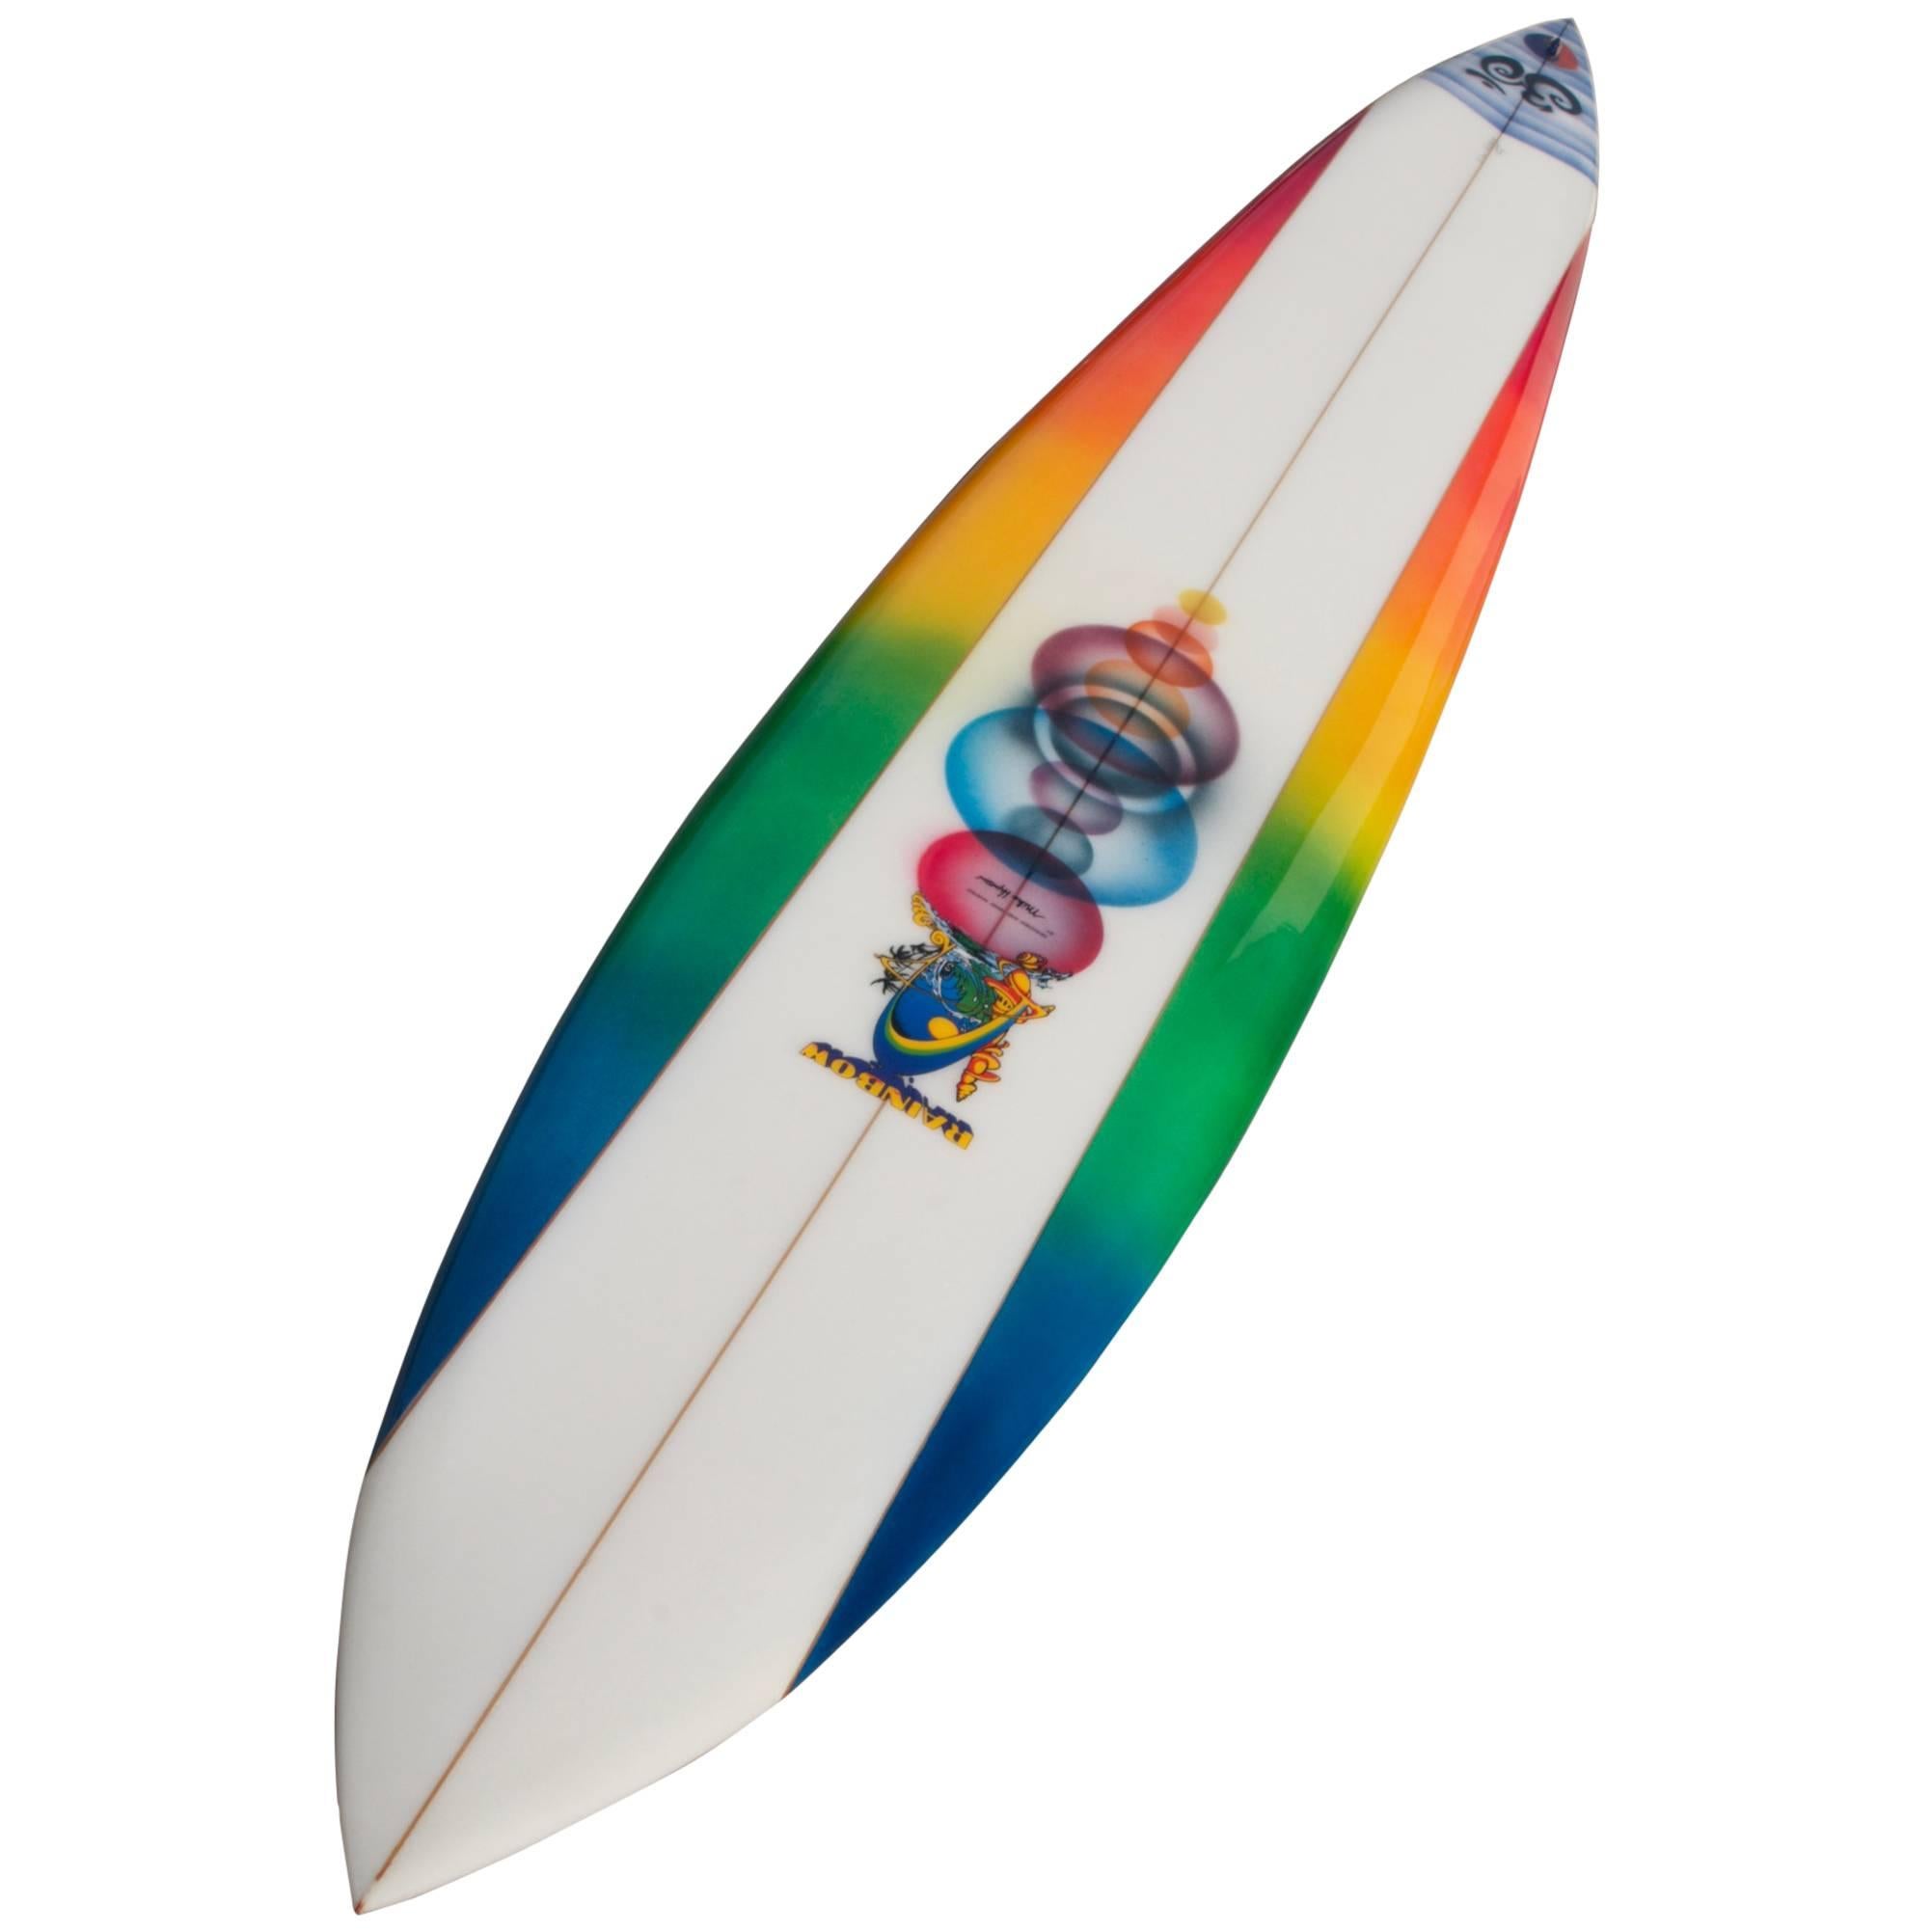 Mike Hynson Hand Shaped Rainbow, Big Wave Gun Surfboard, Artwork by Eilers, New For Sale